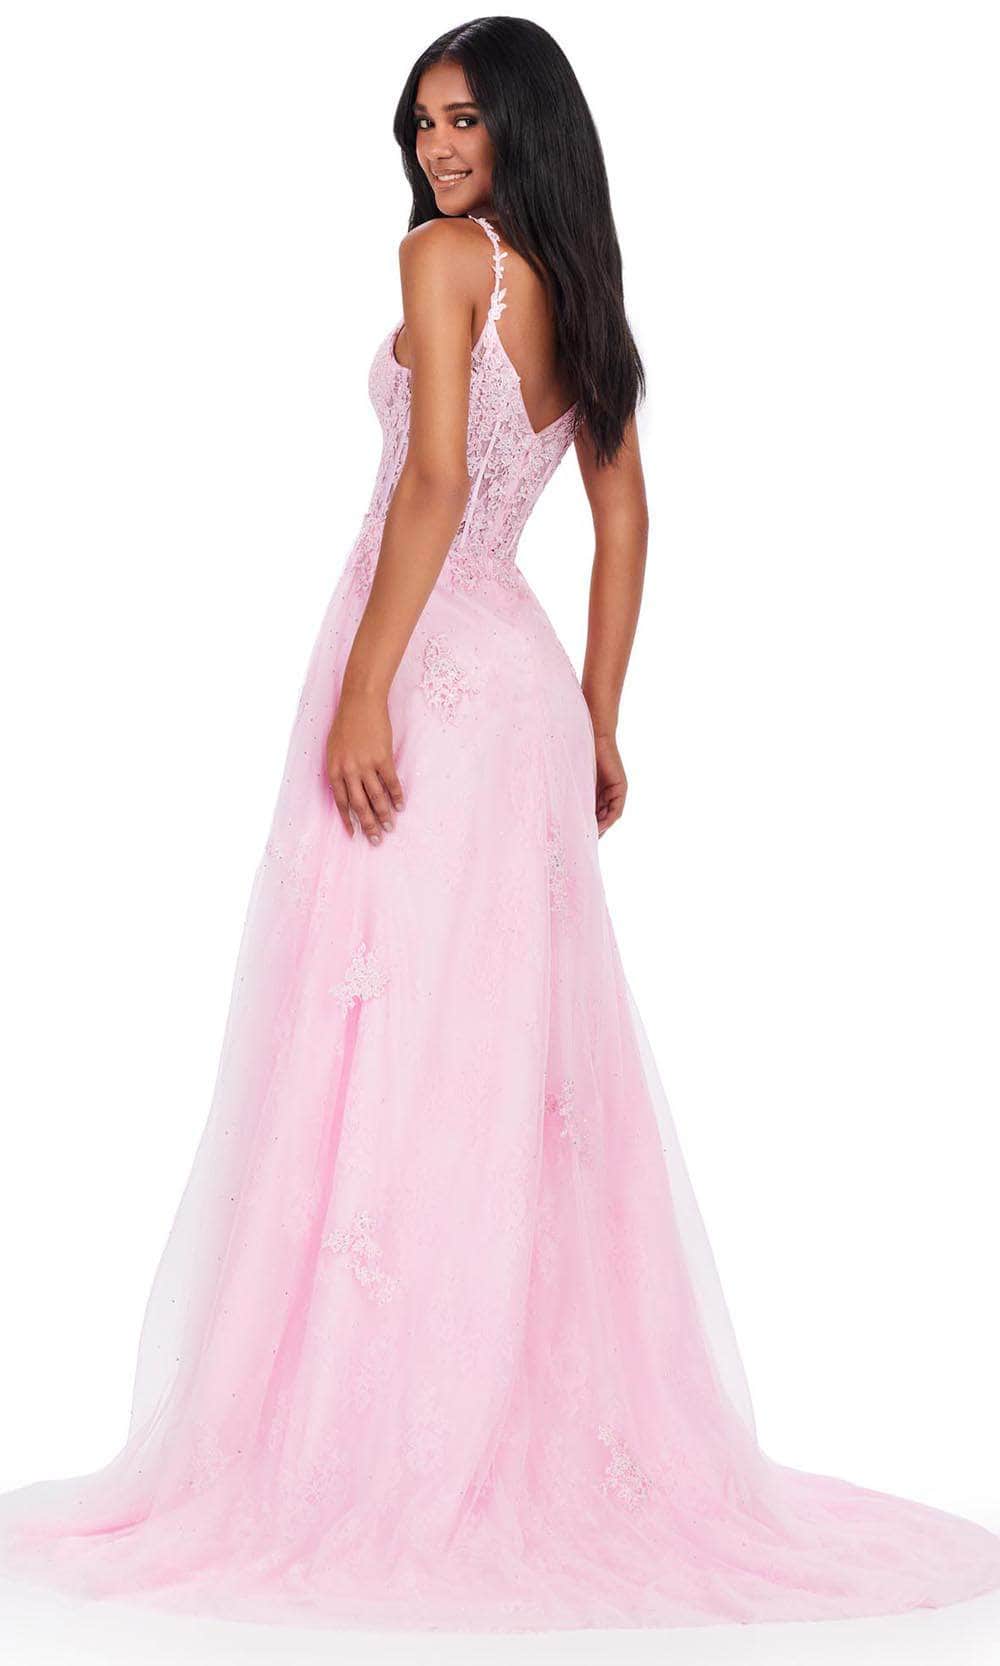 Ashley Lauren 11558 - Sweetheart Applique Prom Dress Prom Dresses